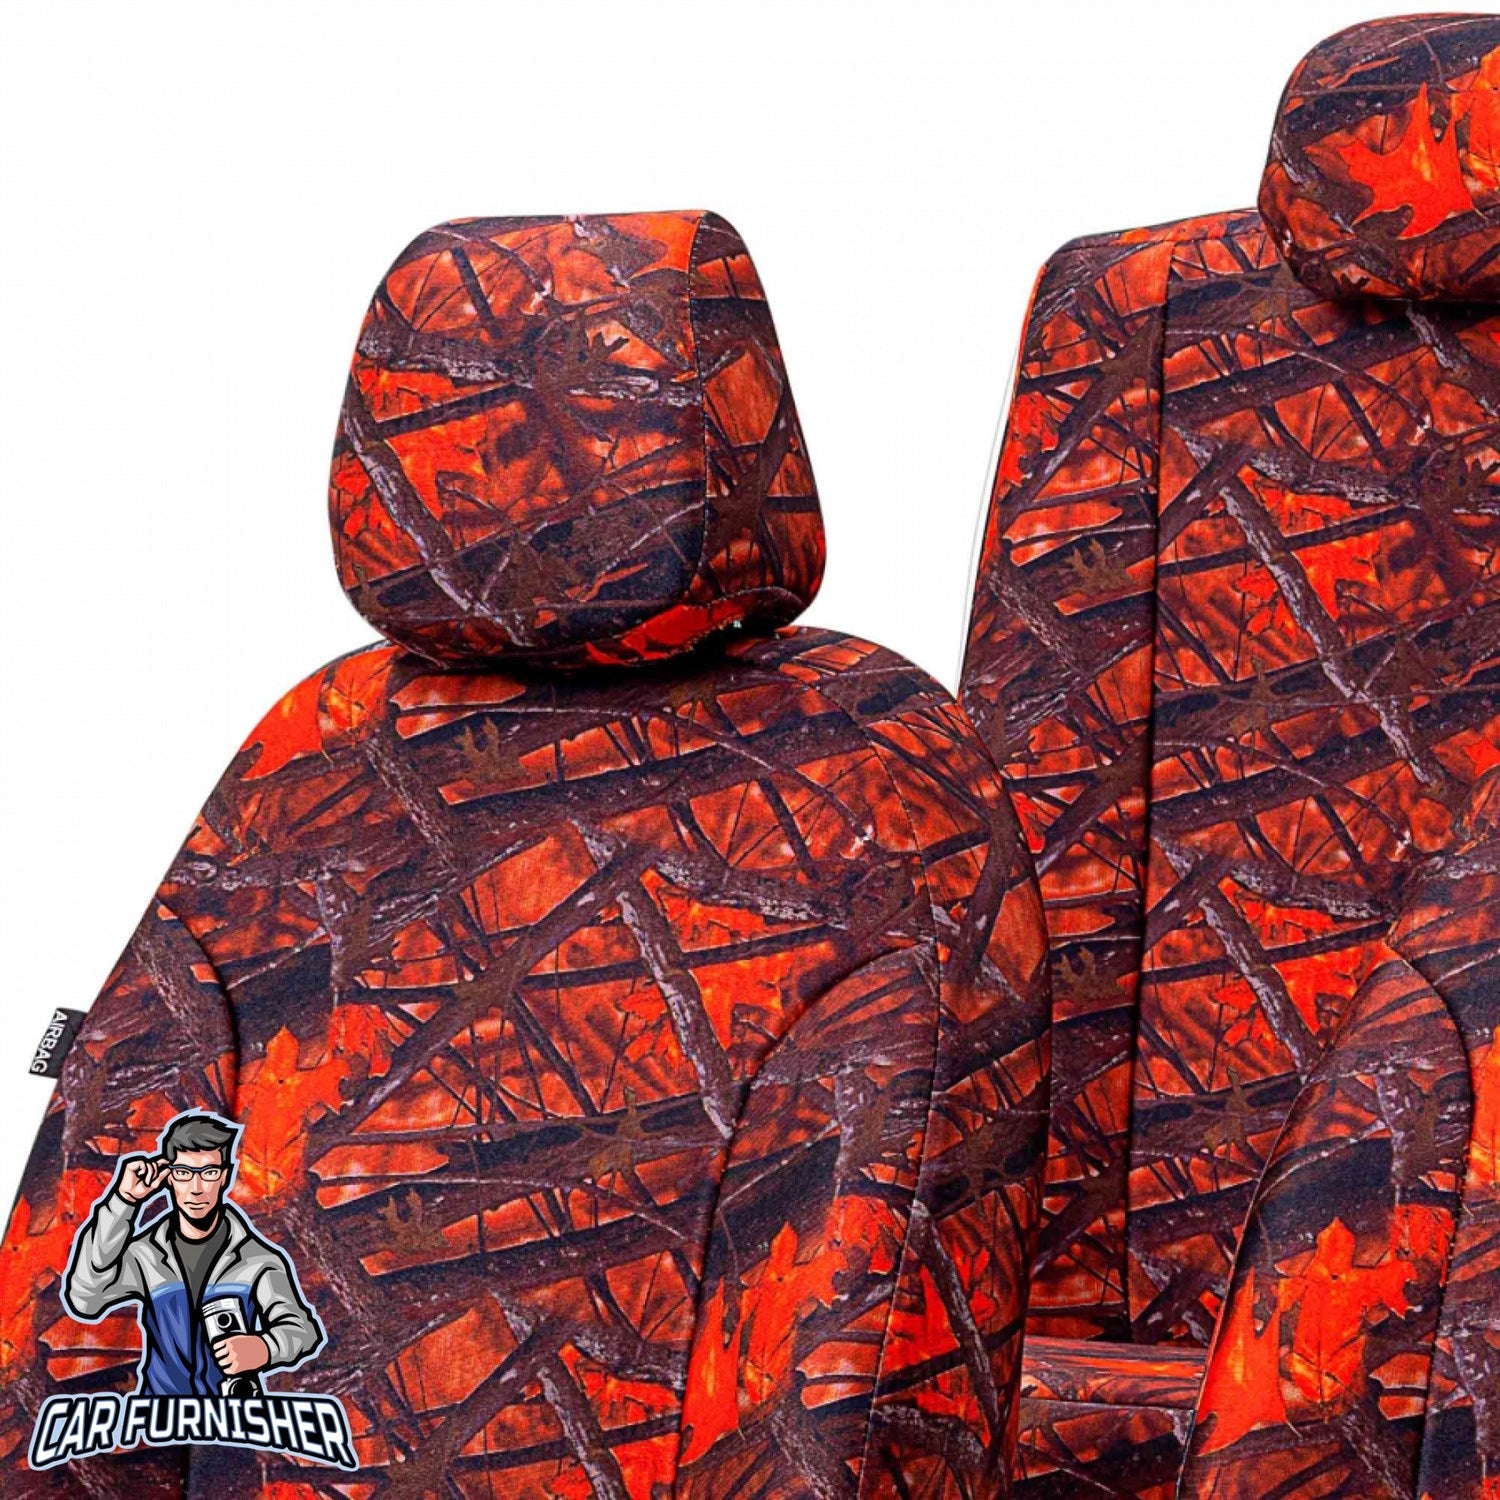 Toyota Prius Seat Cover Camouflage Waterproof Design Sahara Camo Waterproof Fabric